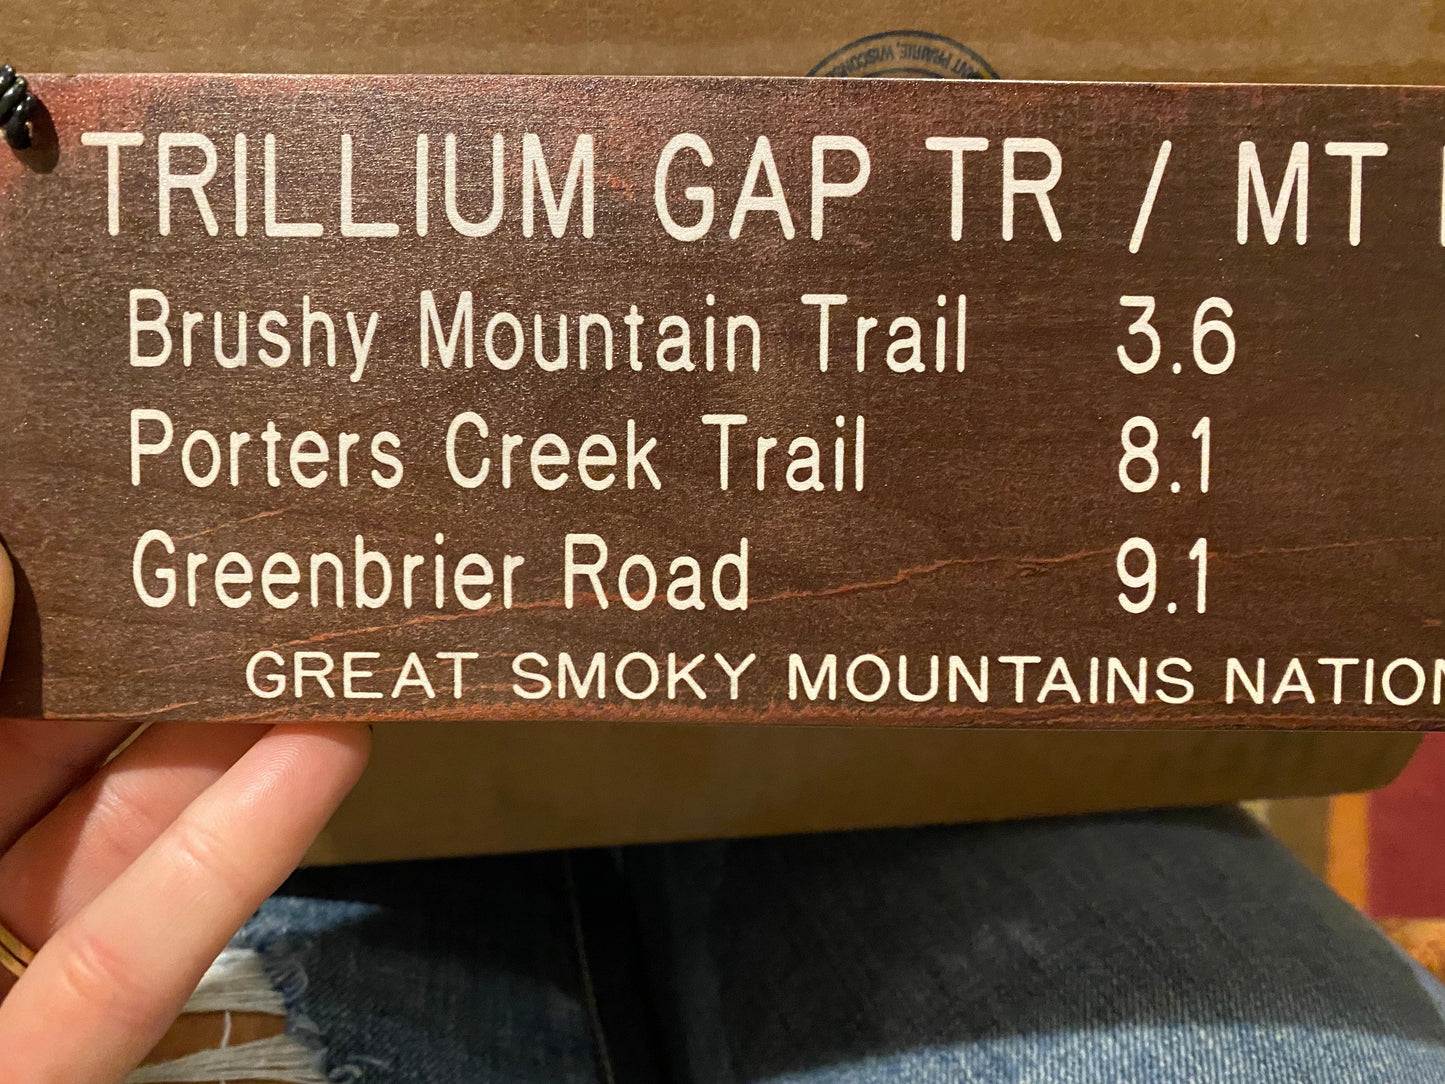 Appalachian Trail Marker.